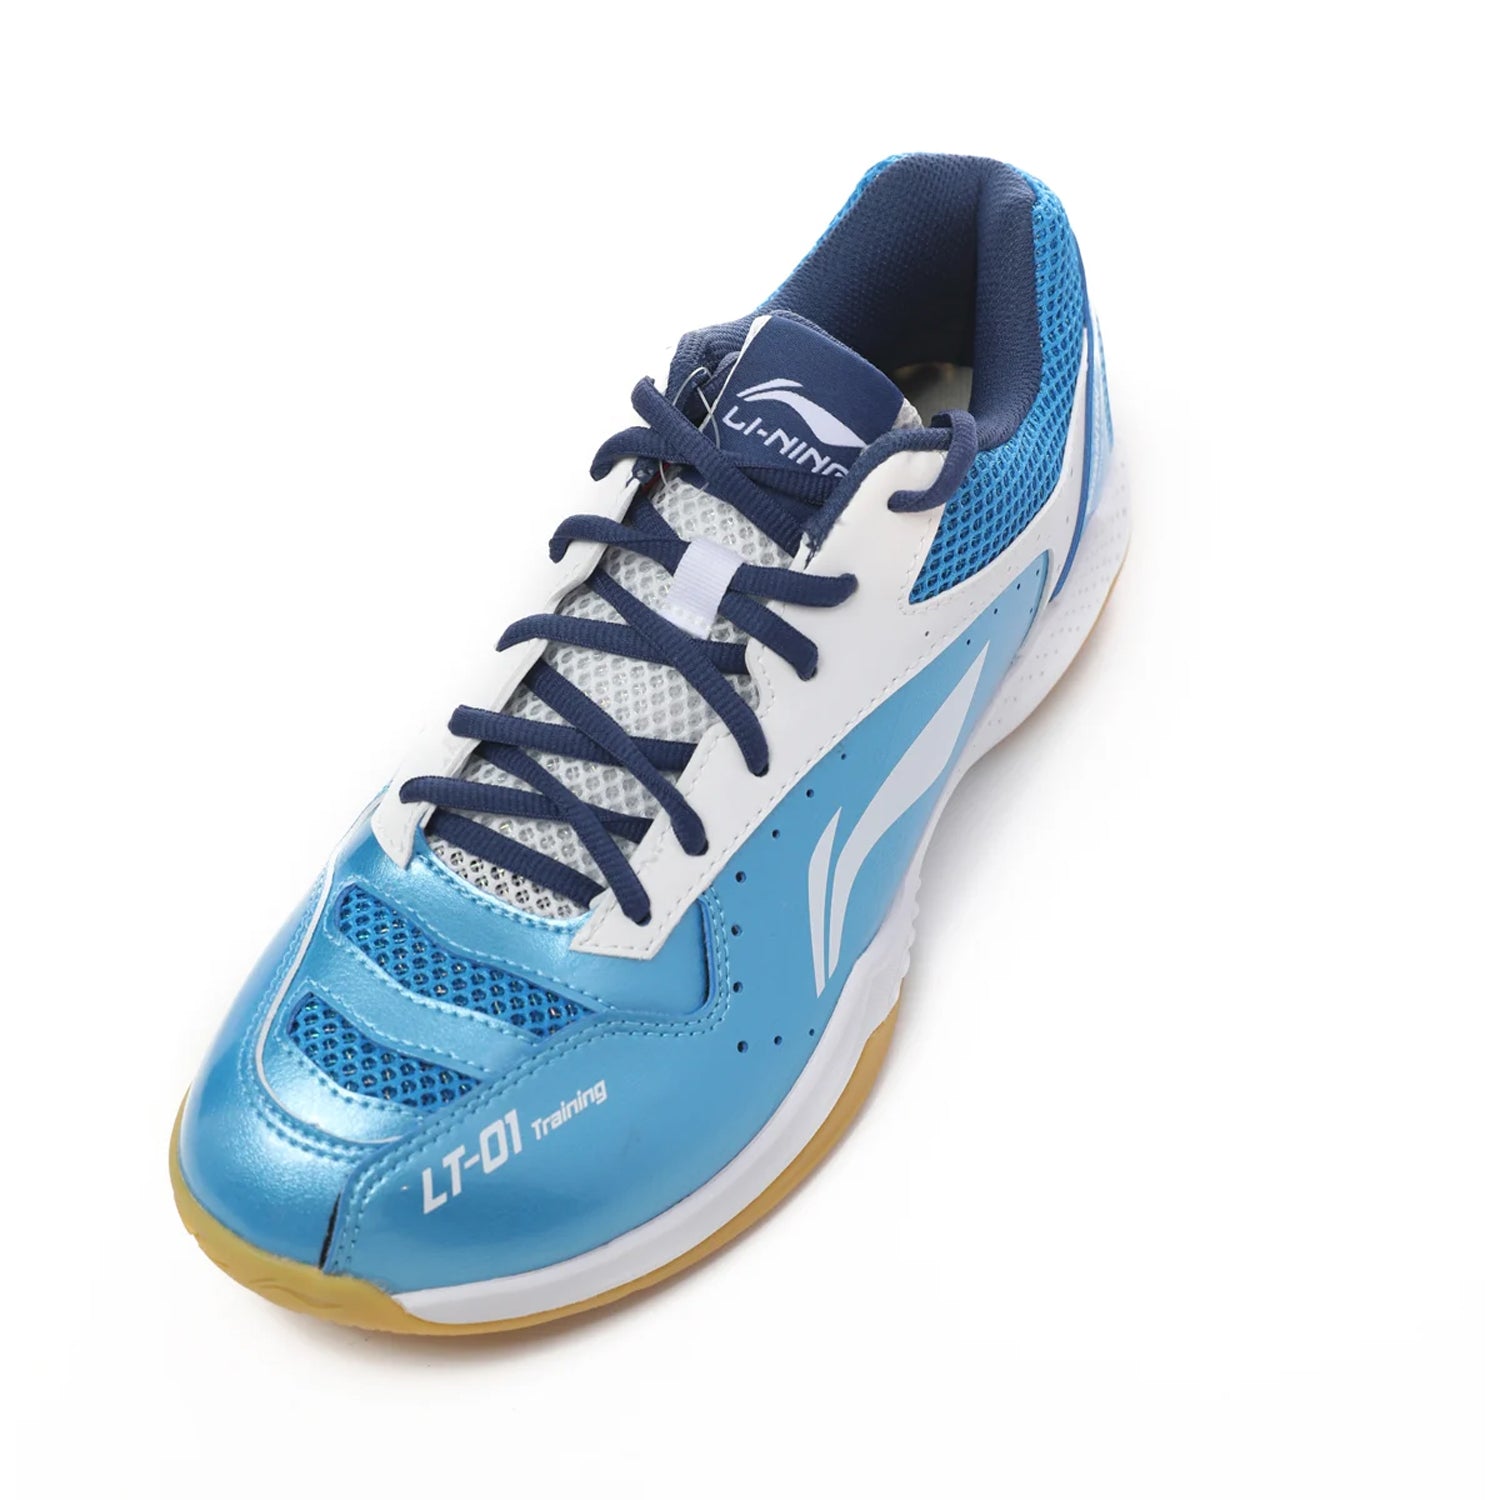 Li-Ning AYTS024 Lei Ting Train Badminton Training Shoes, Interstellar Blue/Standard White - Best Price online Prokicksports.com